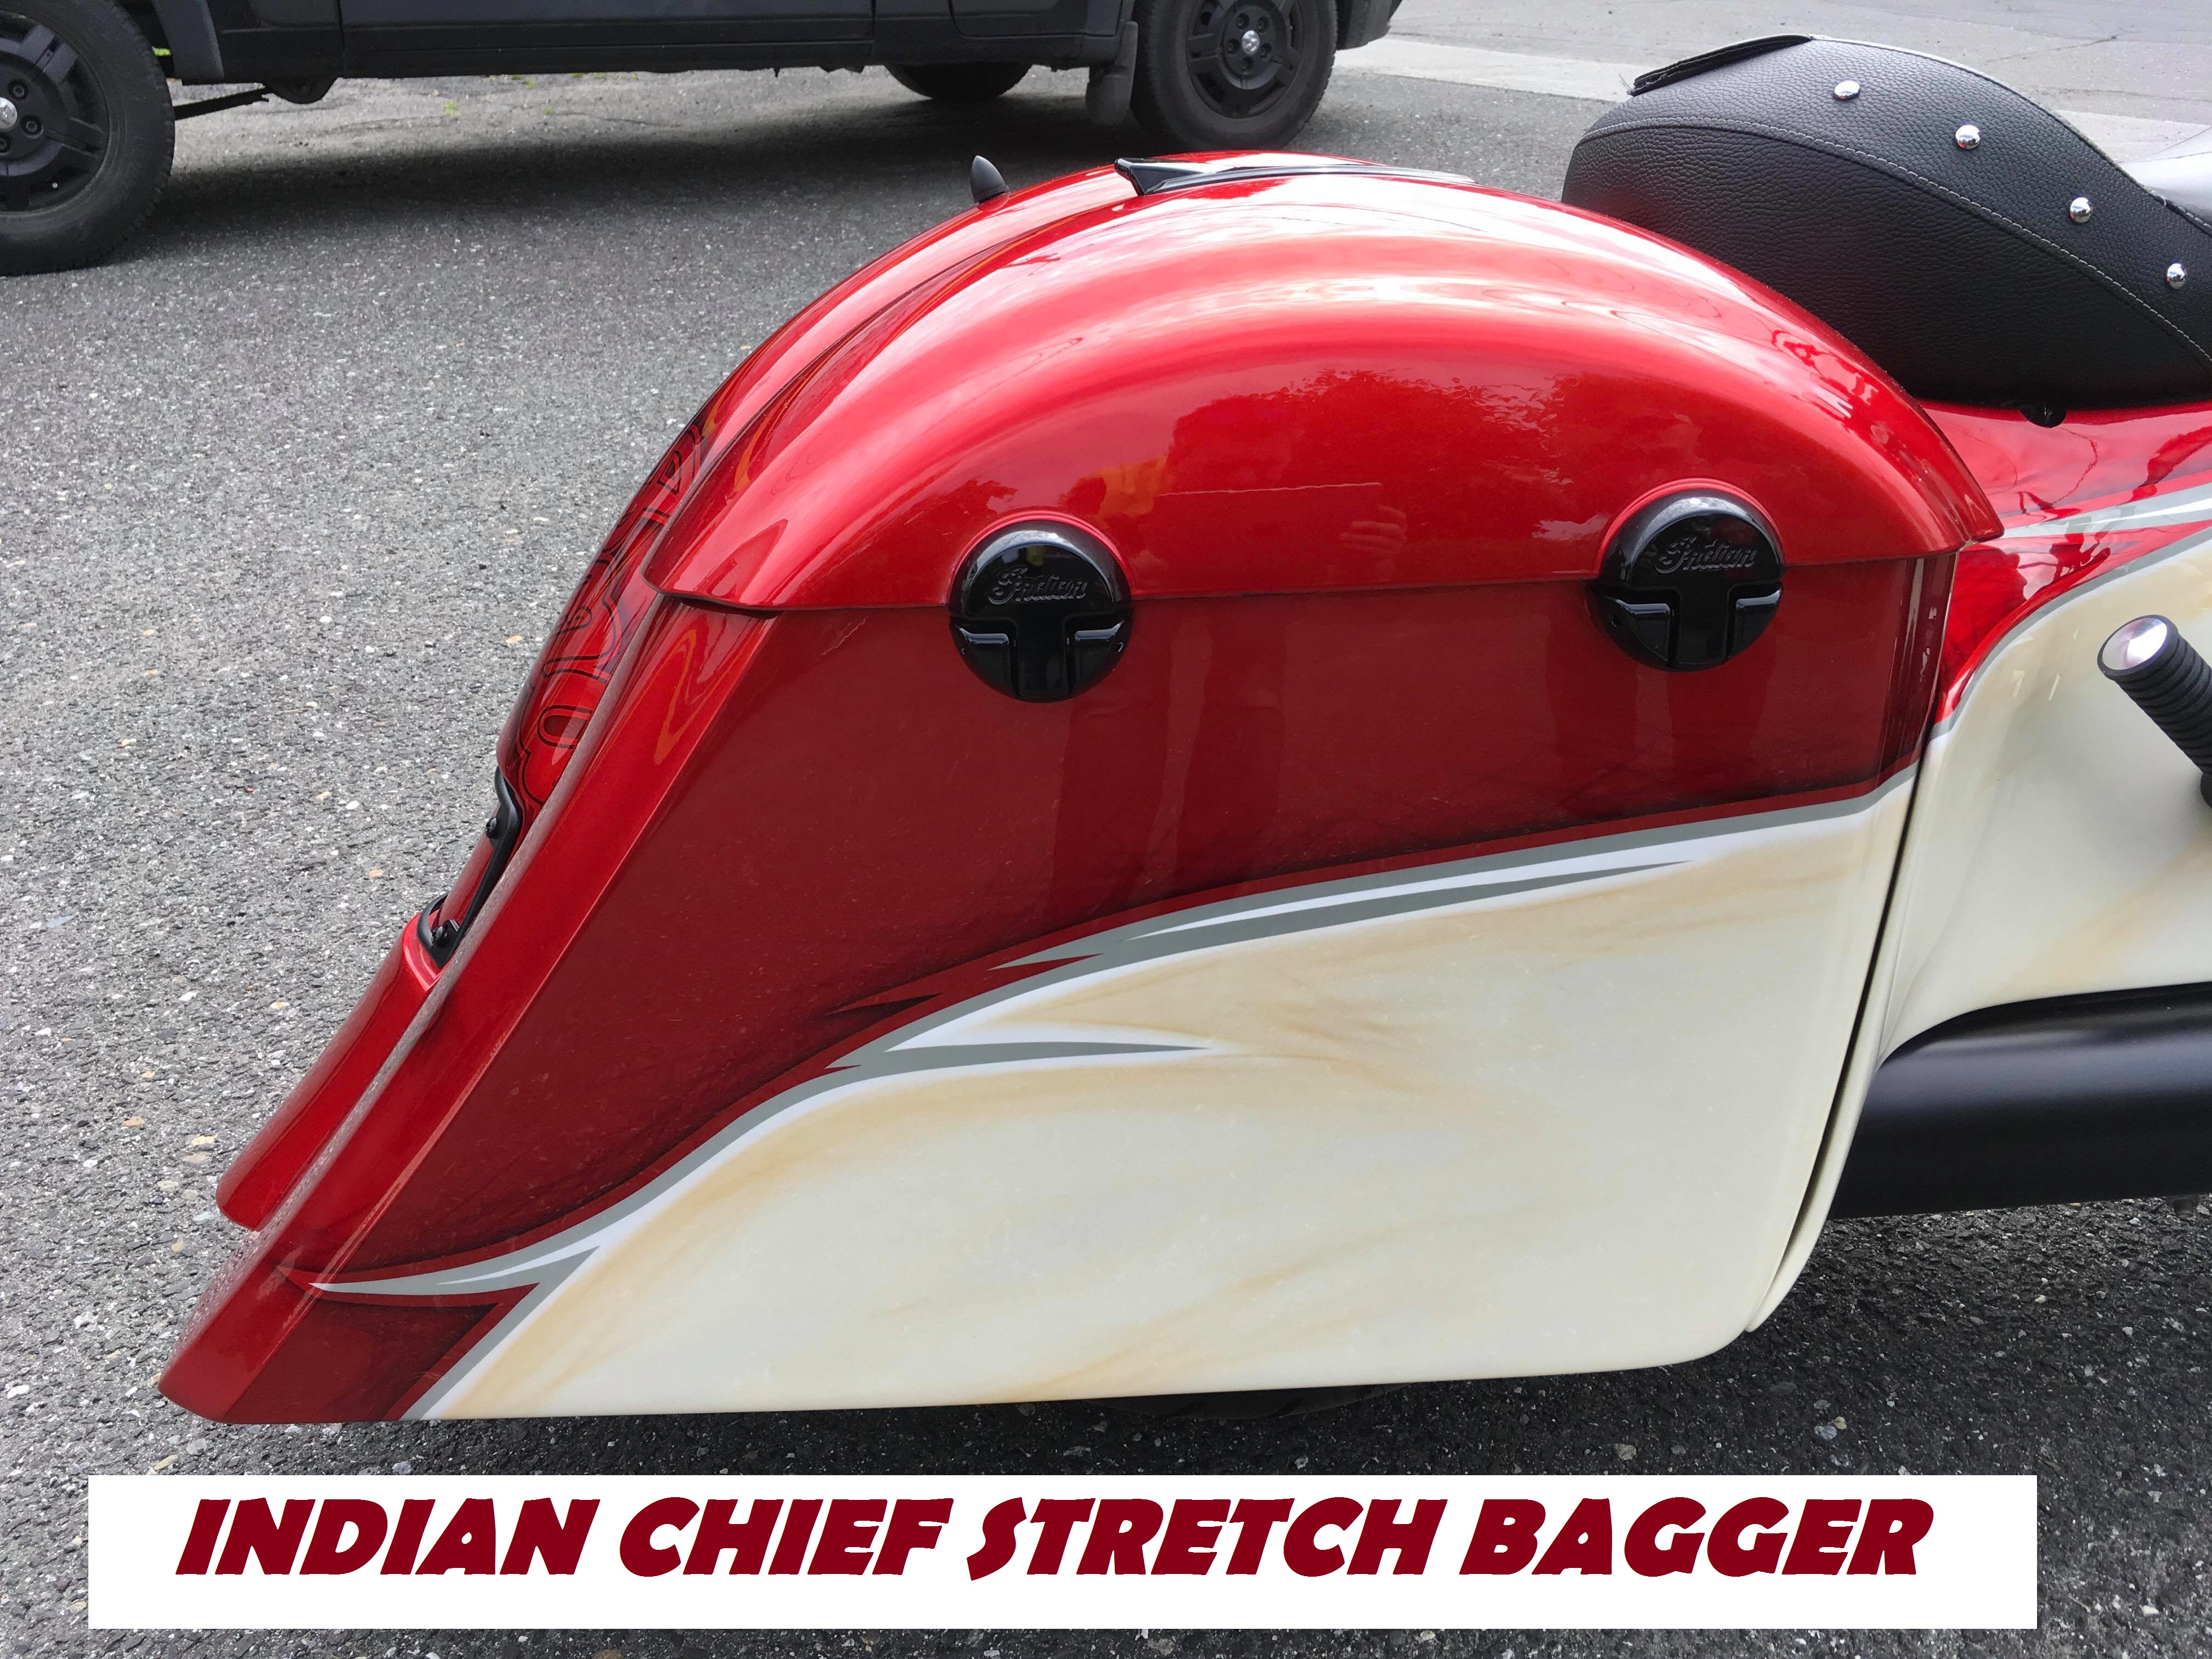 hpconcept bagger chief saddlebag